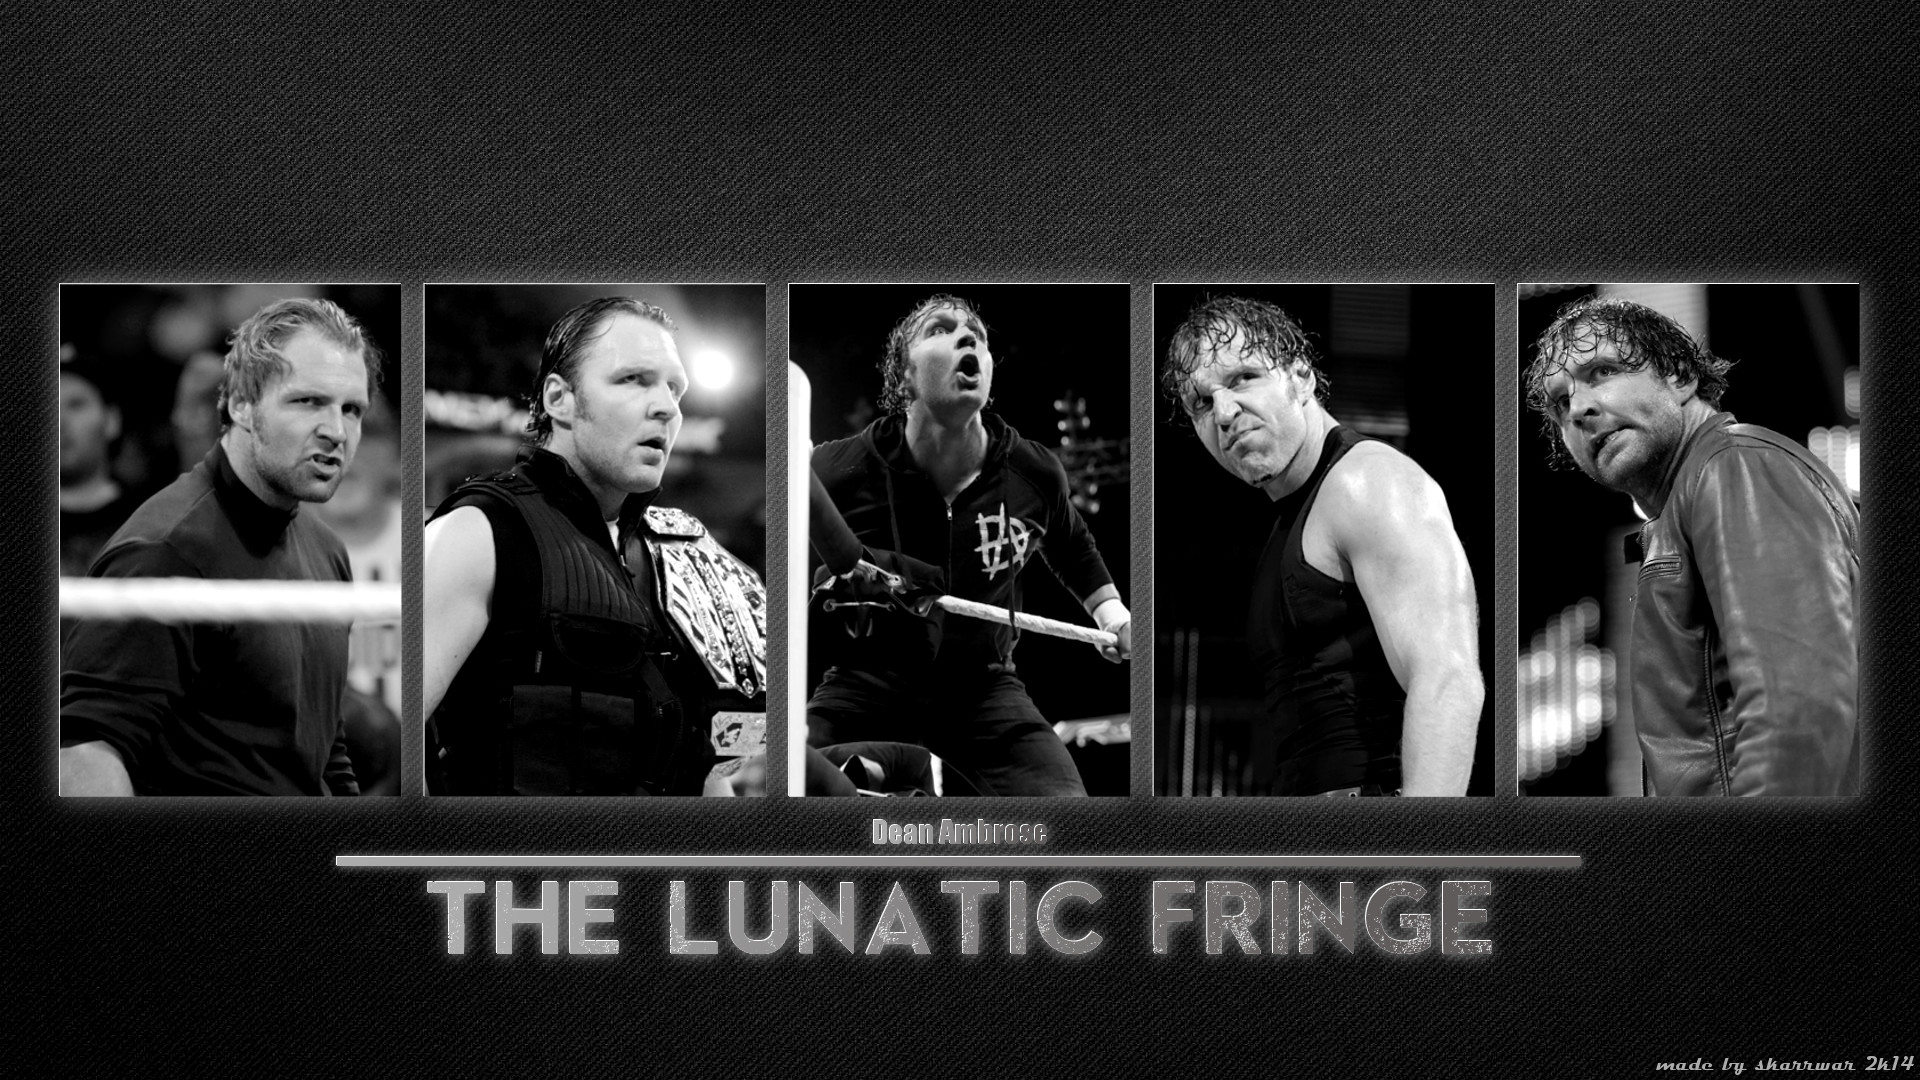 1920x1080 ... Dean Ambrose - The Lunatic Fringe Black and White by SkarrDWar